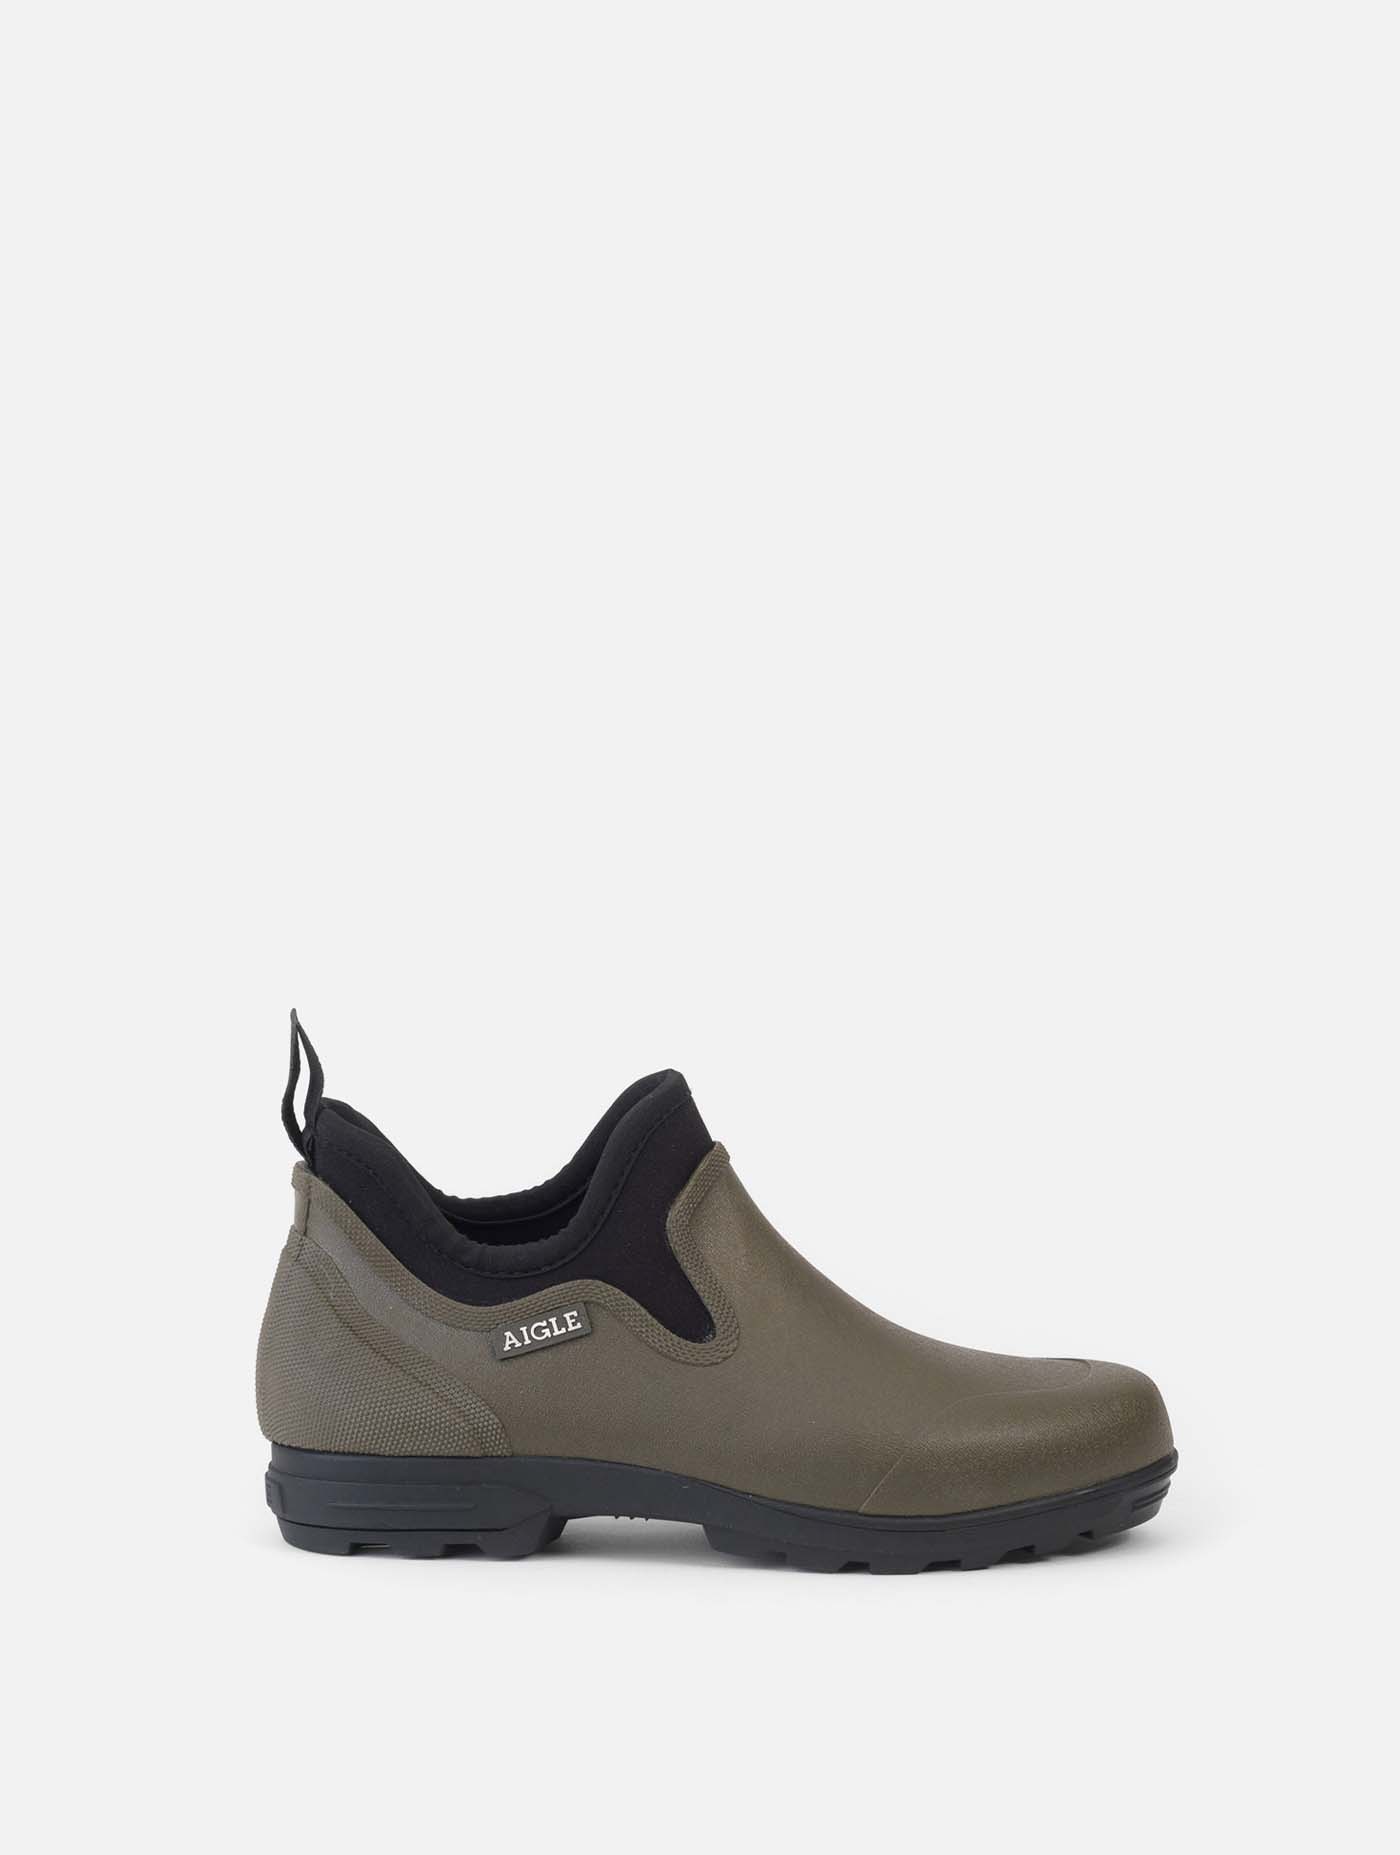 Aigle - The two-material boot, designed for intensive wear Kaki - Lessfor plus | AIGLE